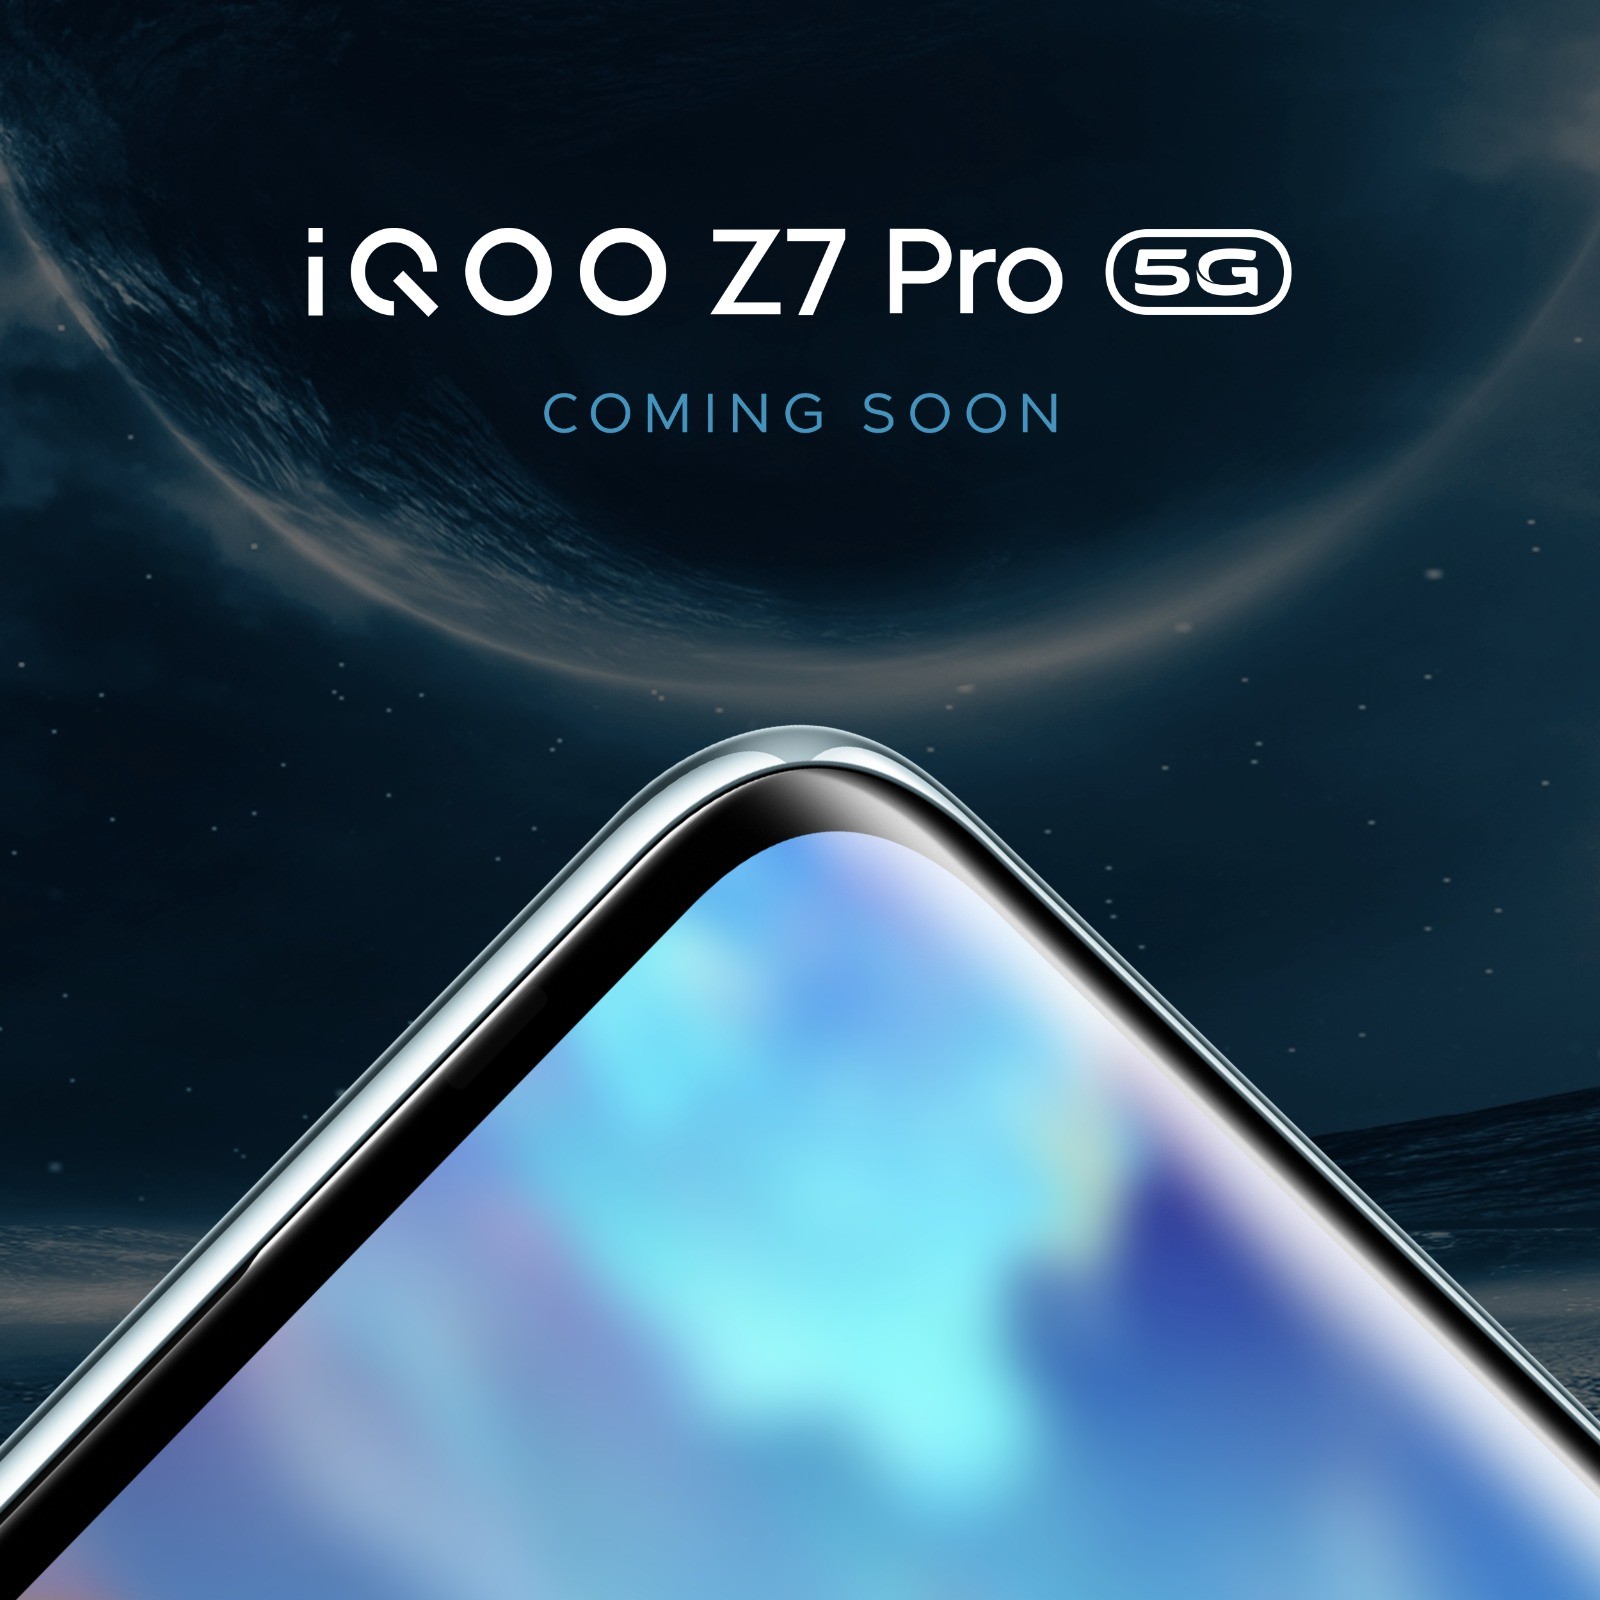 iqoo-z7-pro-5g-3-1691485886.jpg